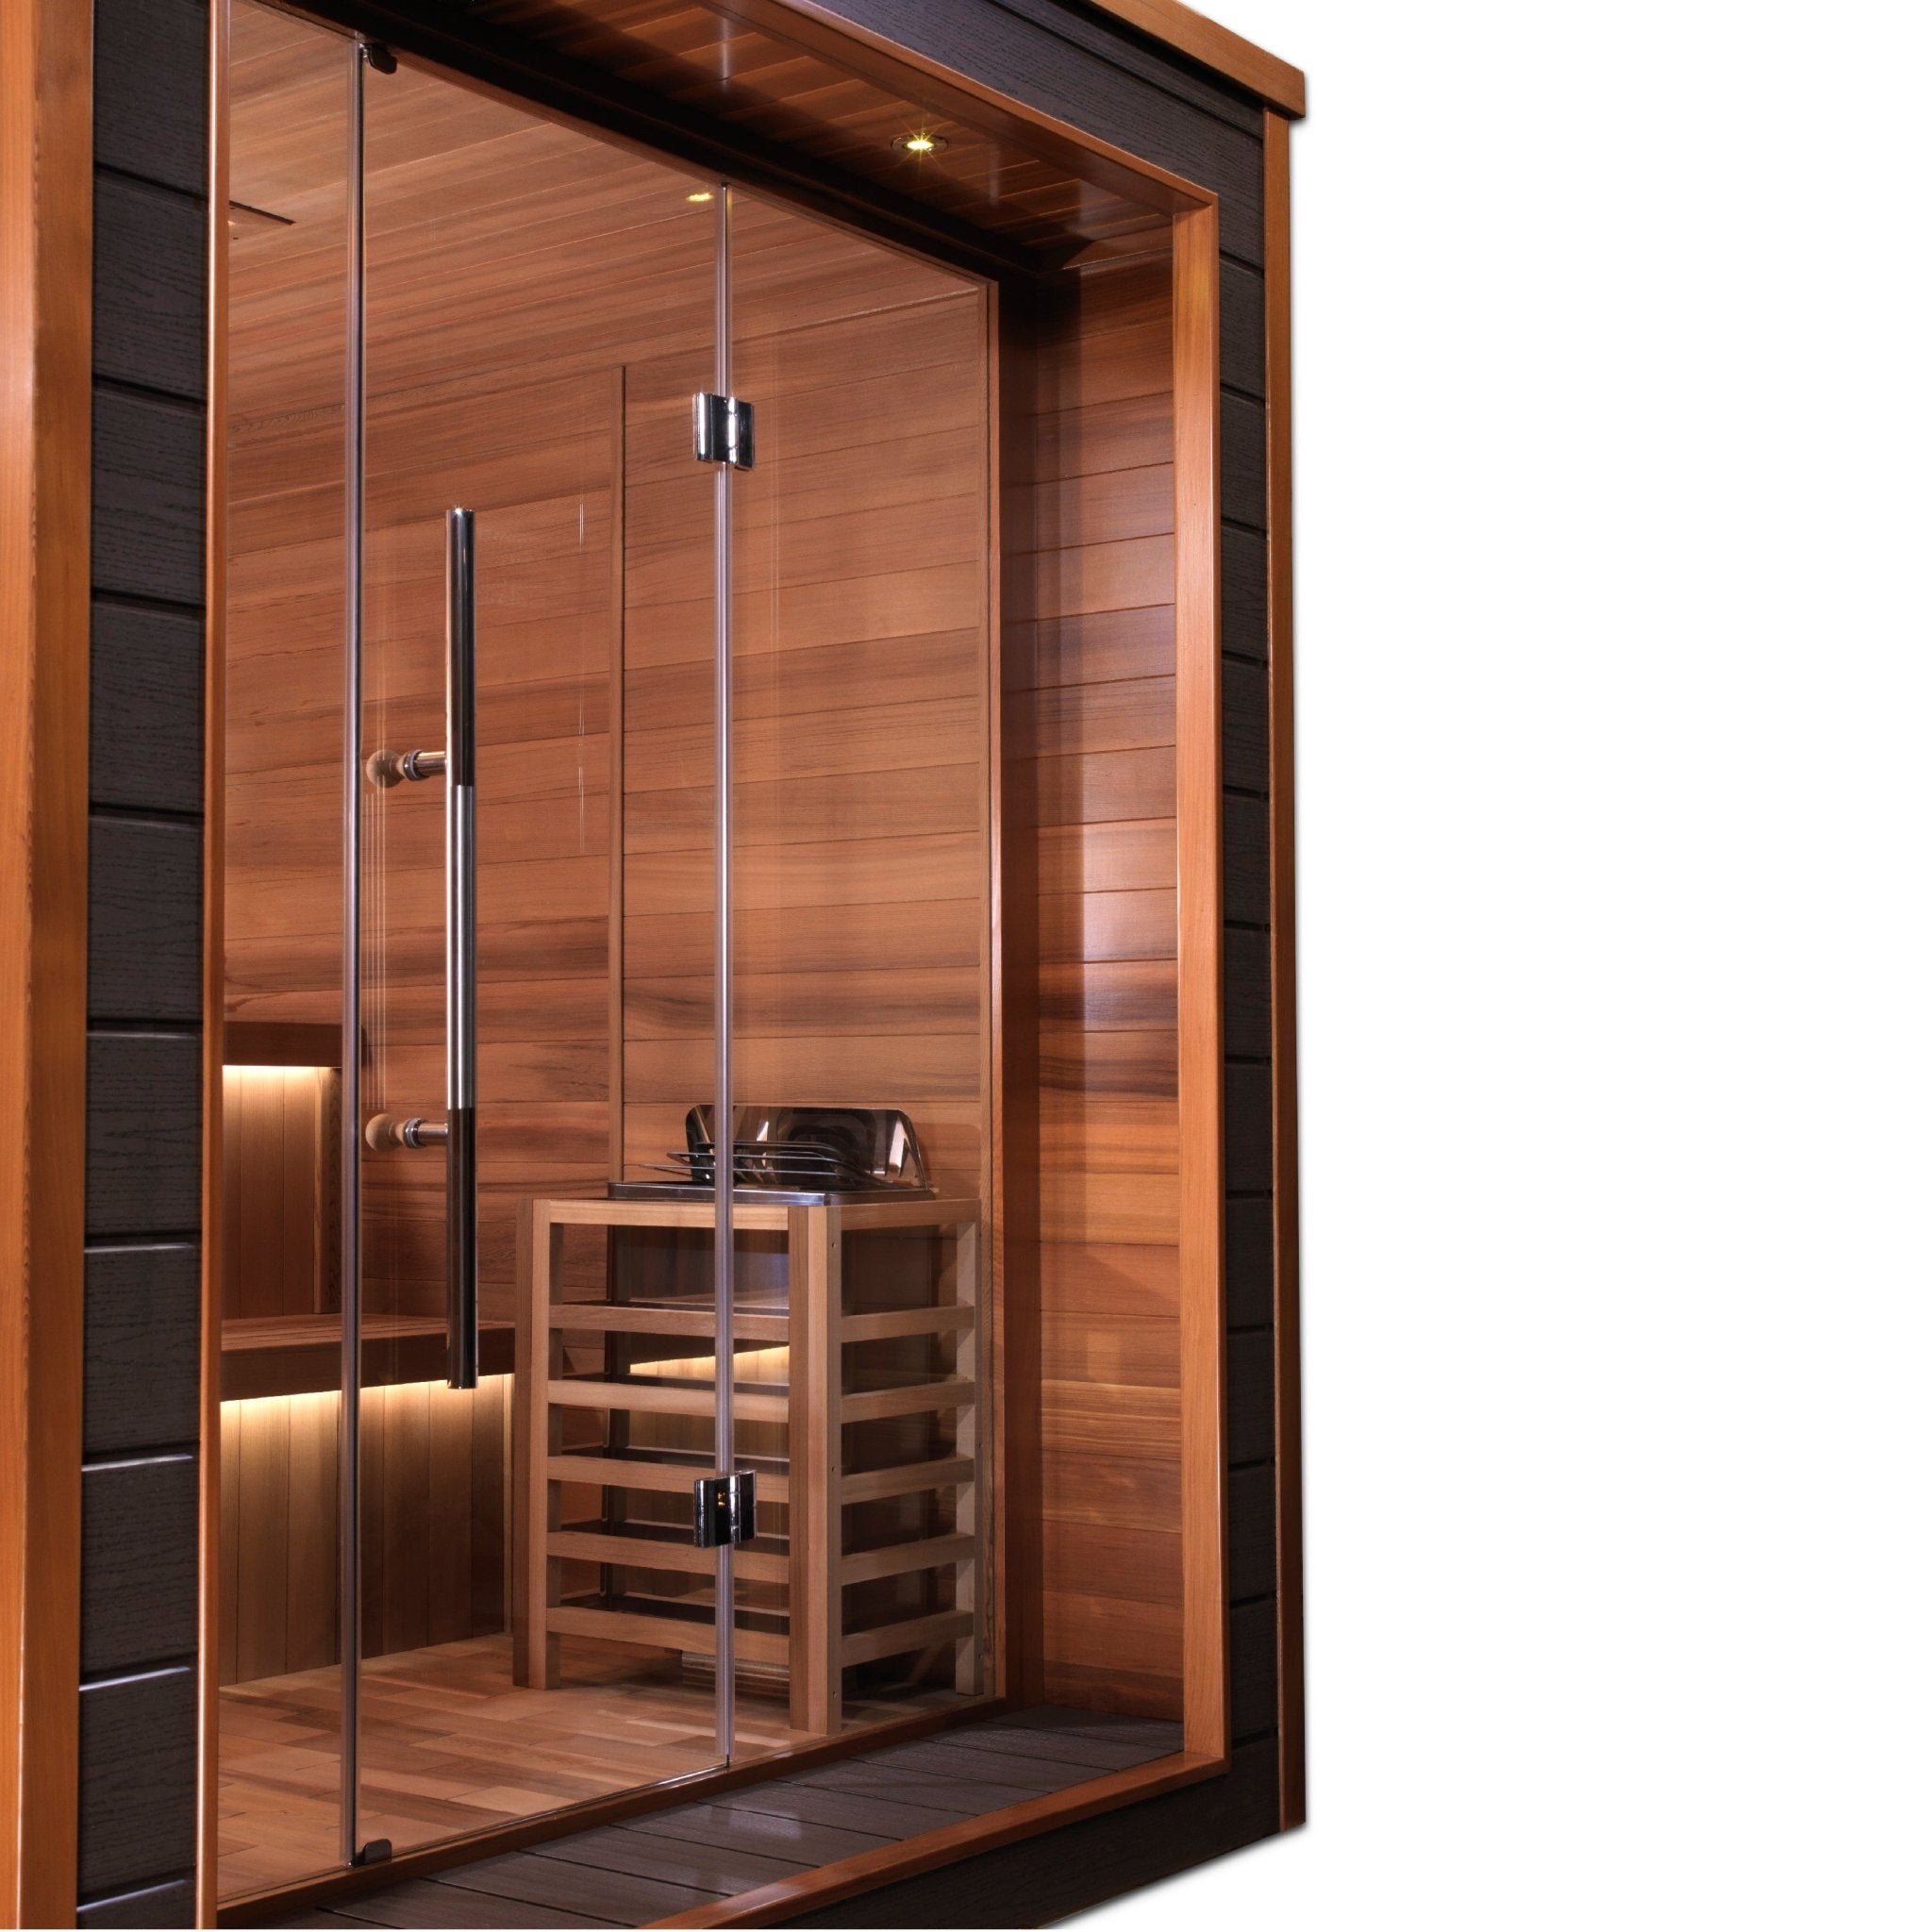 Golden Designs "Bergen" 6 Person Traditional Outdoor Sauna GDI-8206-01 - Select Saunas